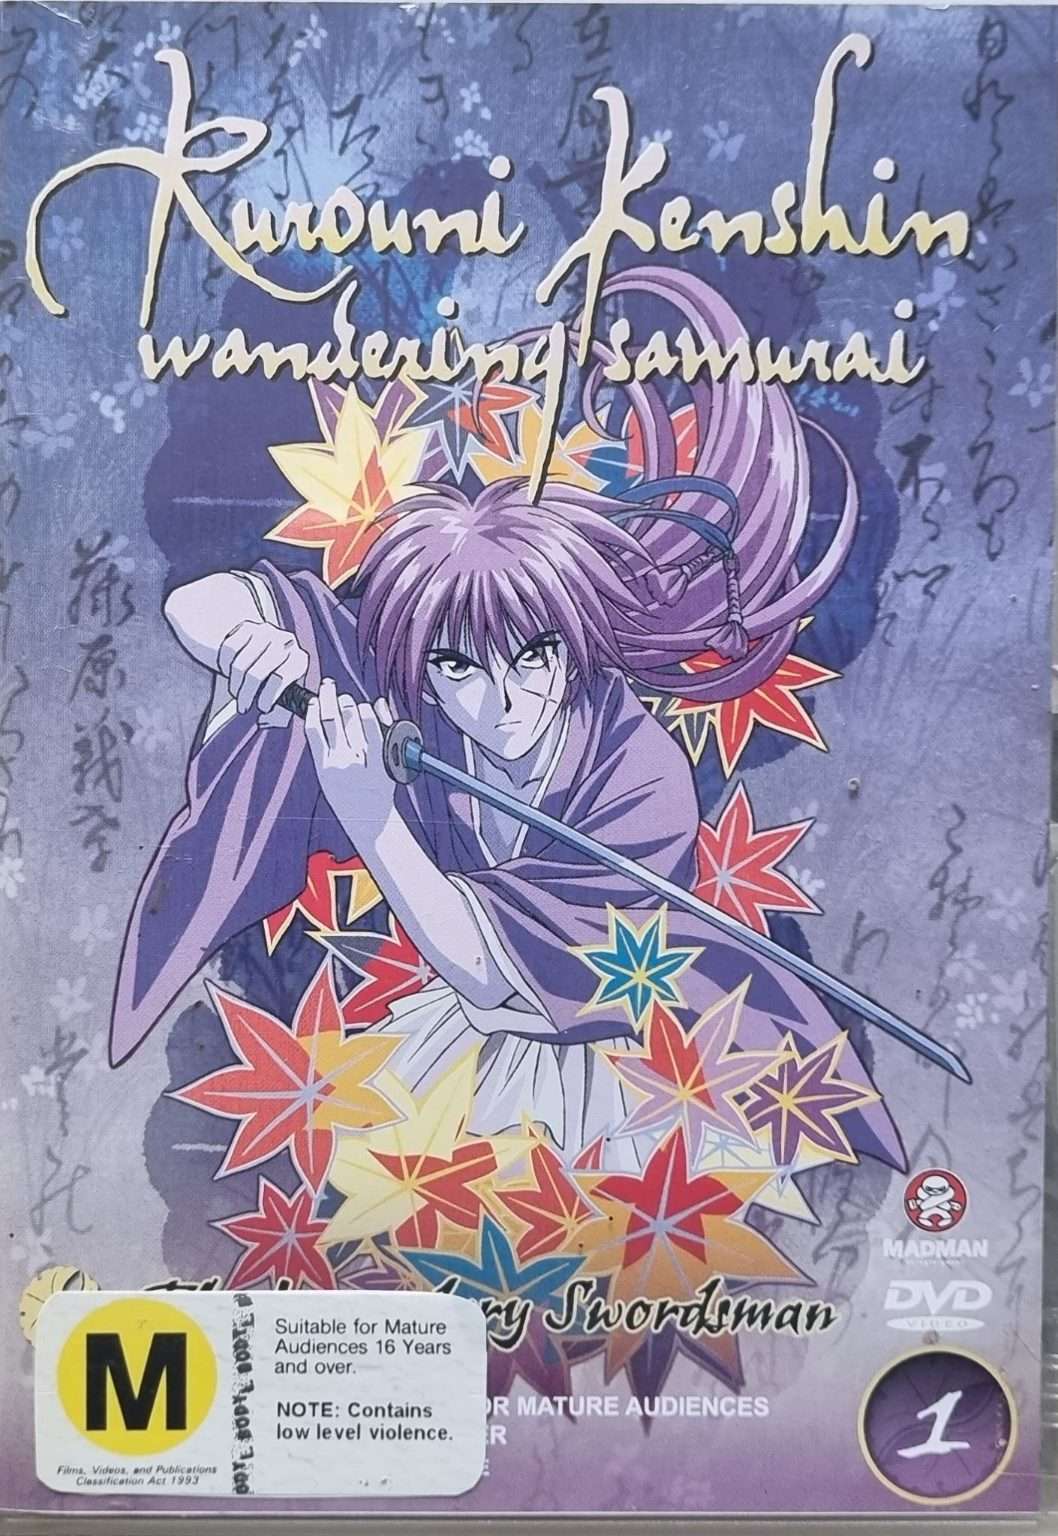 Rurouni Kenshin - Wandering Samurai - The Legendary Swordsman 1